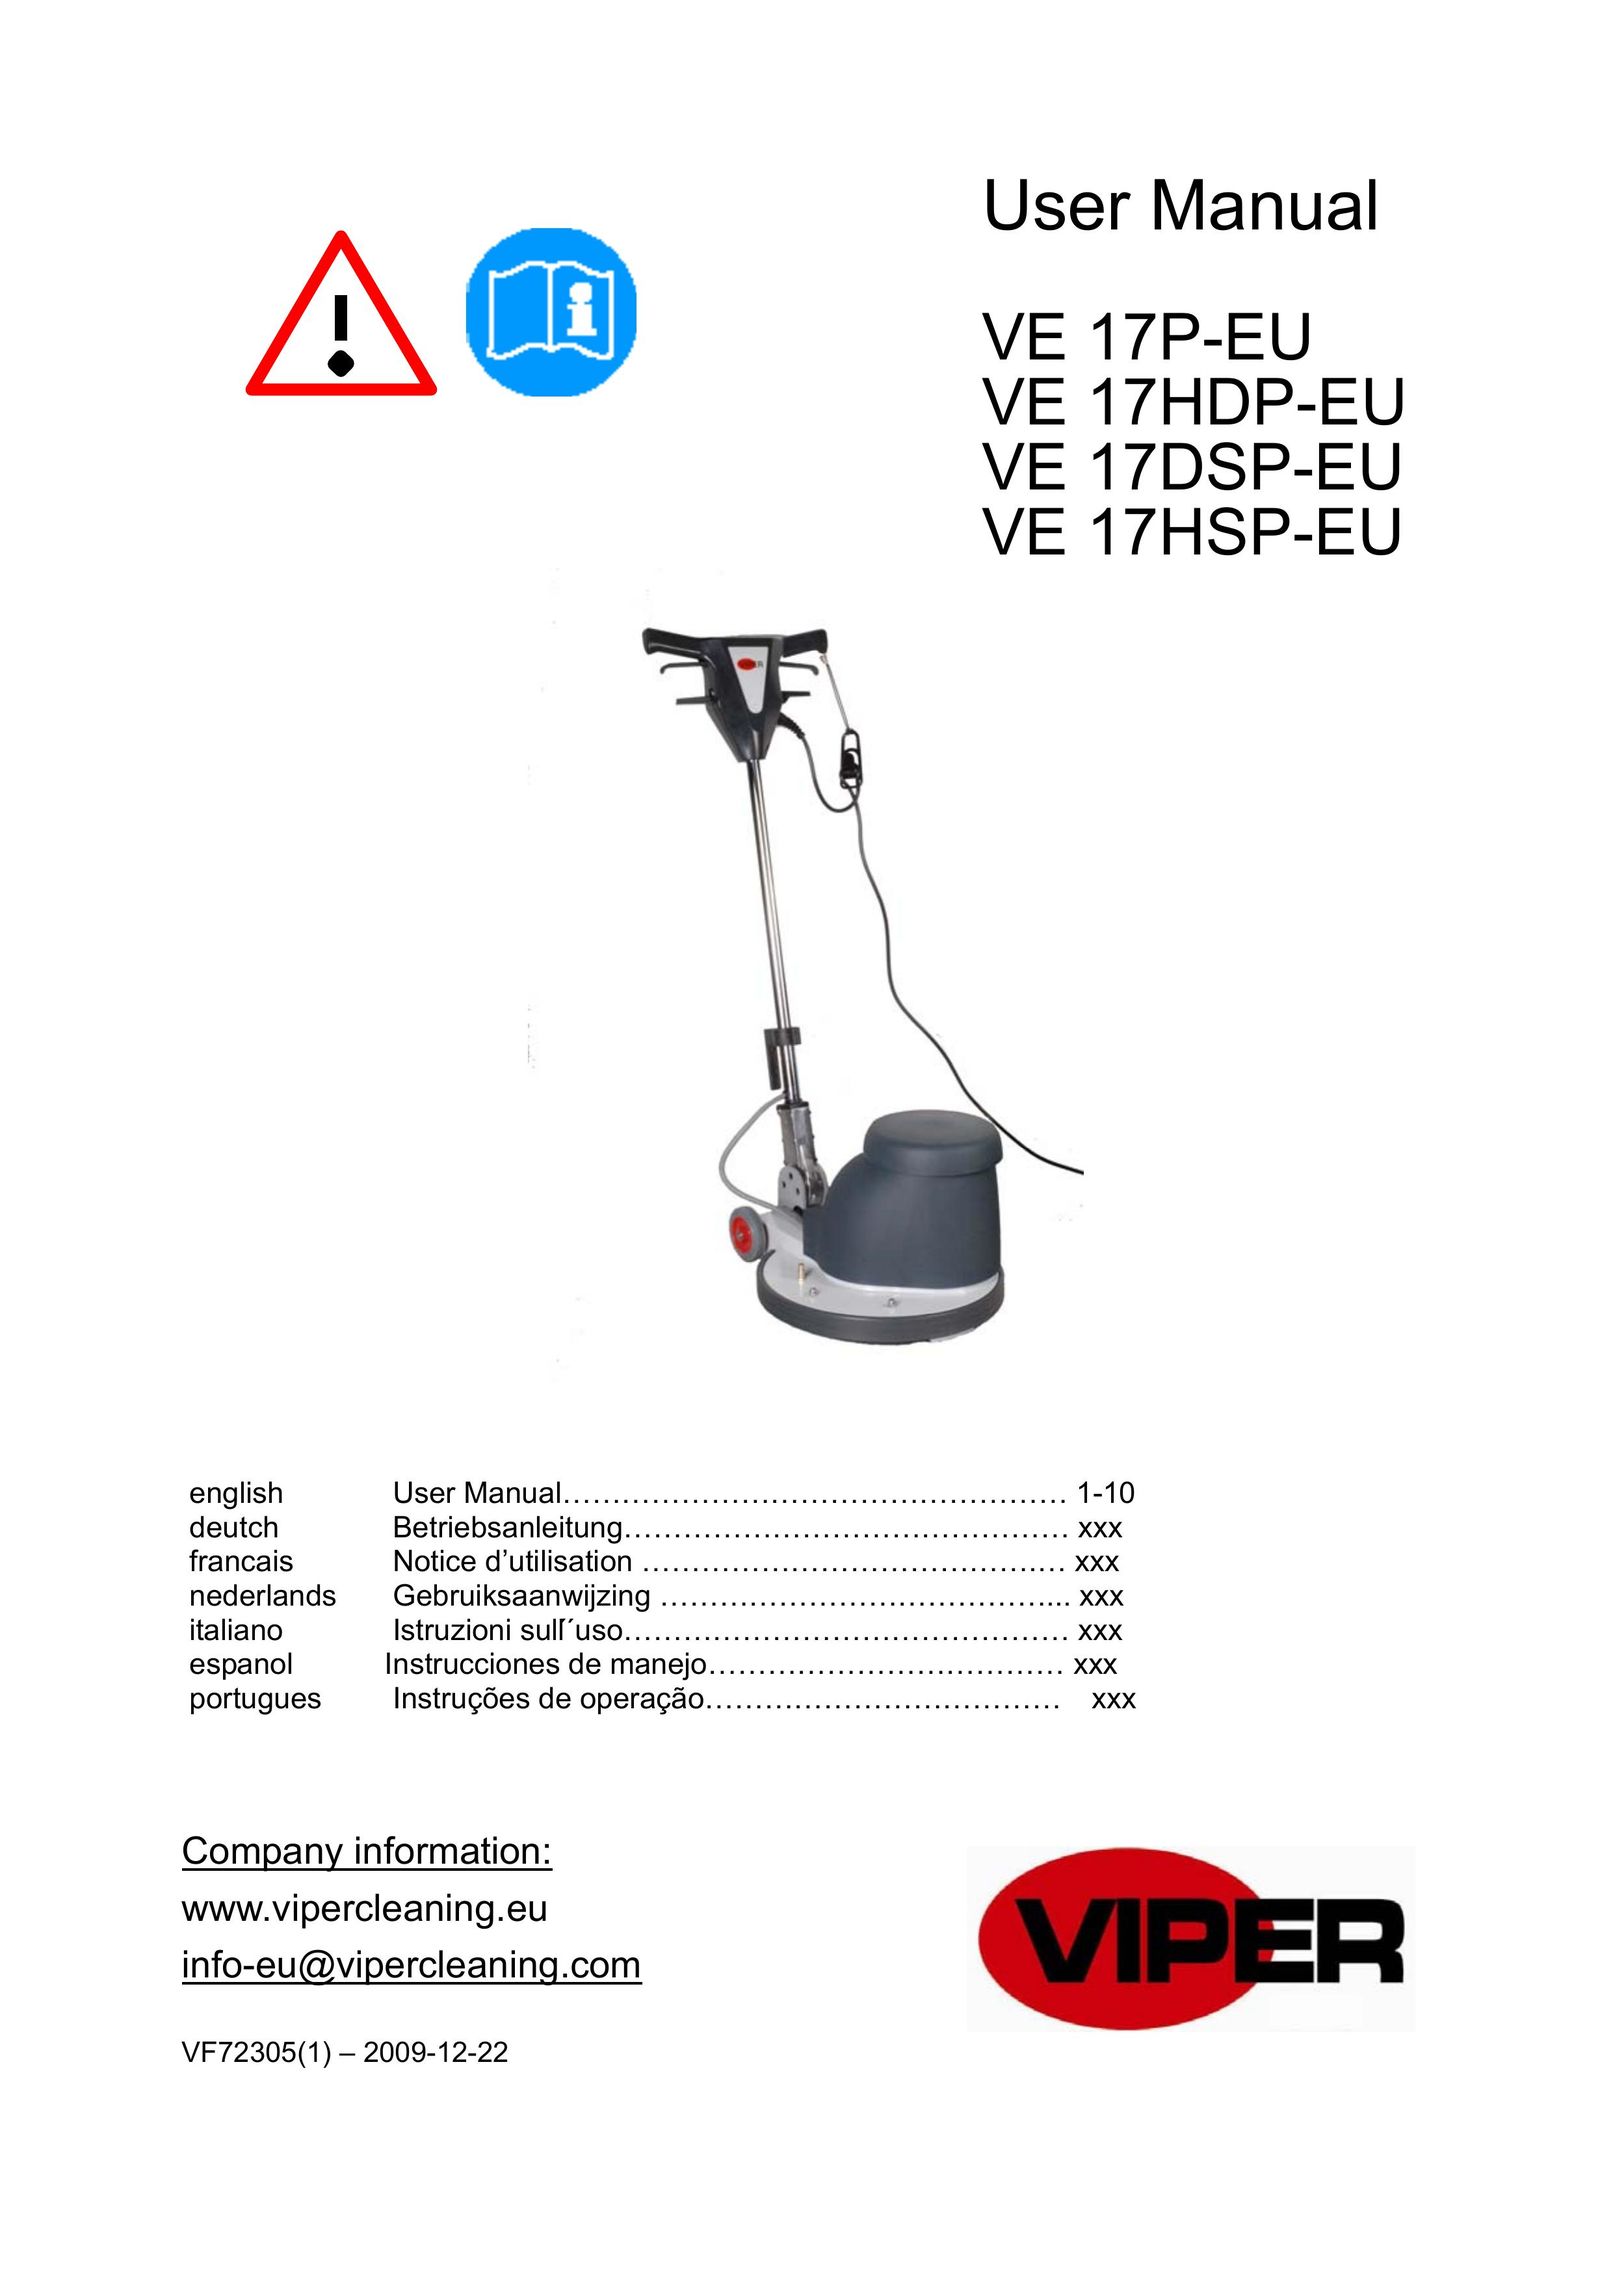 Viper VE 17P-EU Vacuum Cleaner User Manual